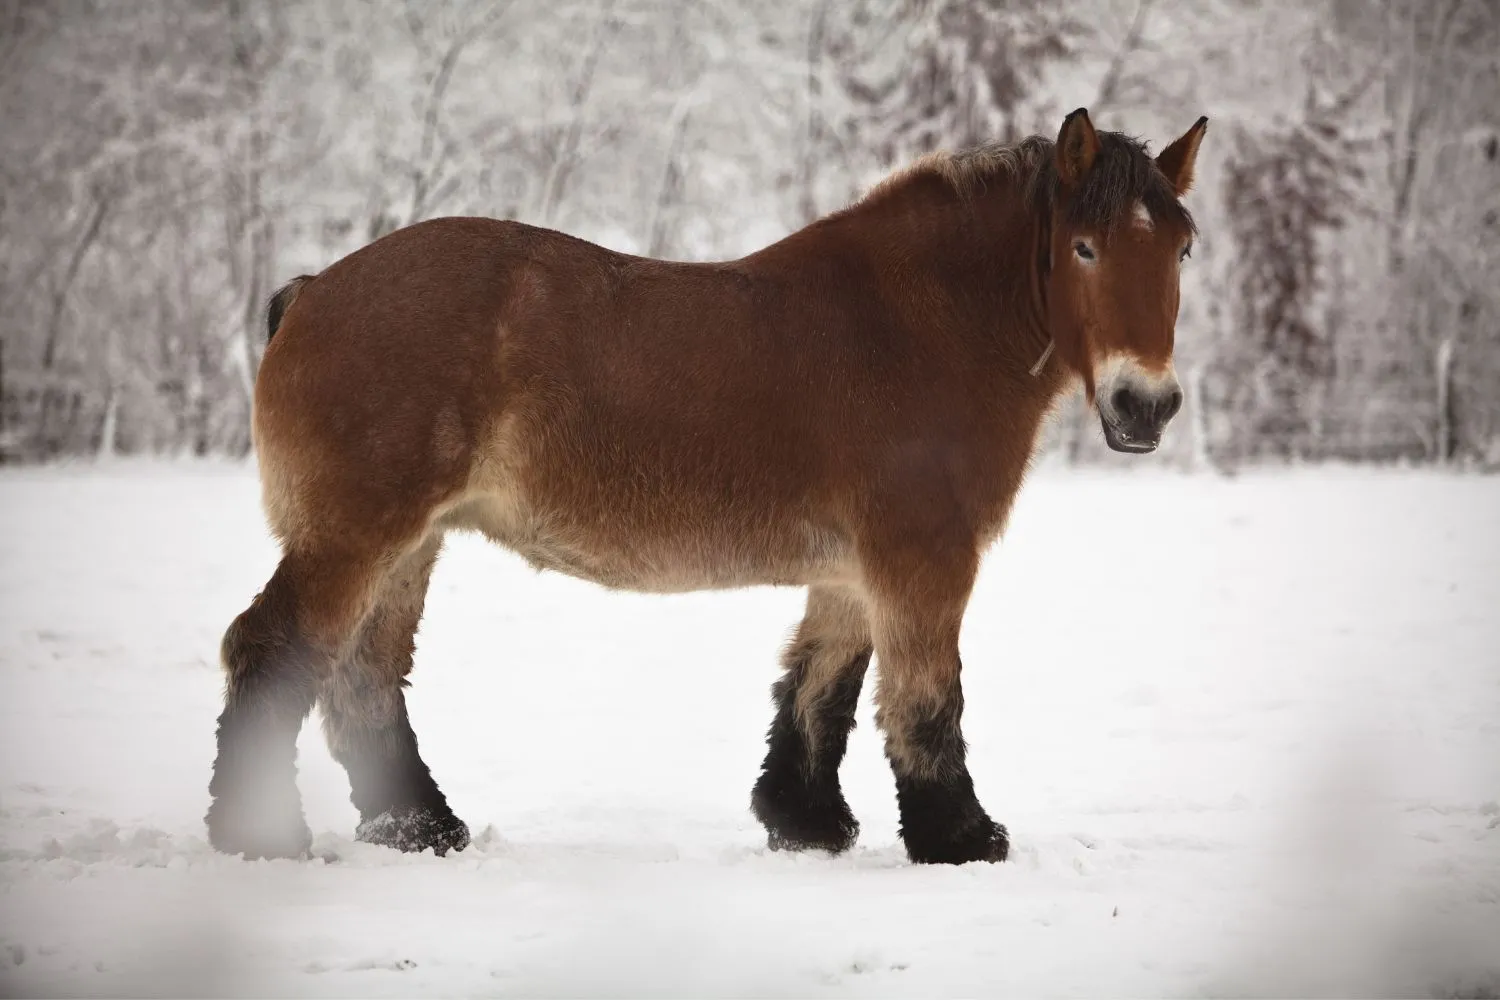 Belgian draught horse: Big, bigger, strongest